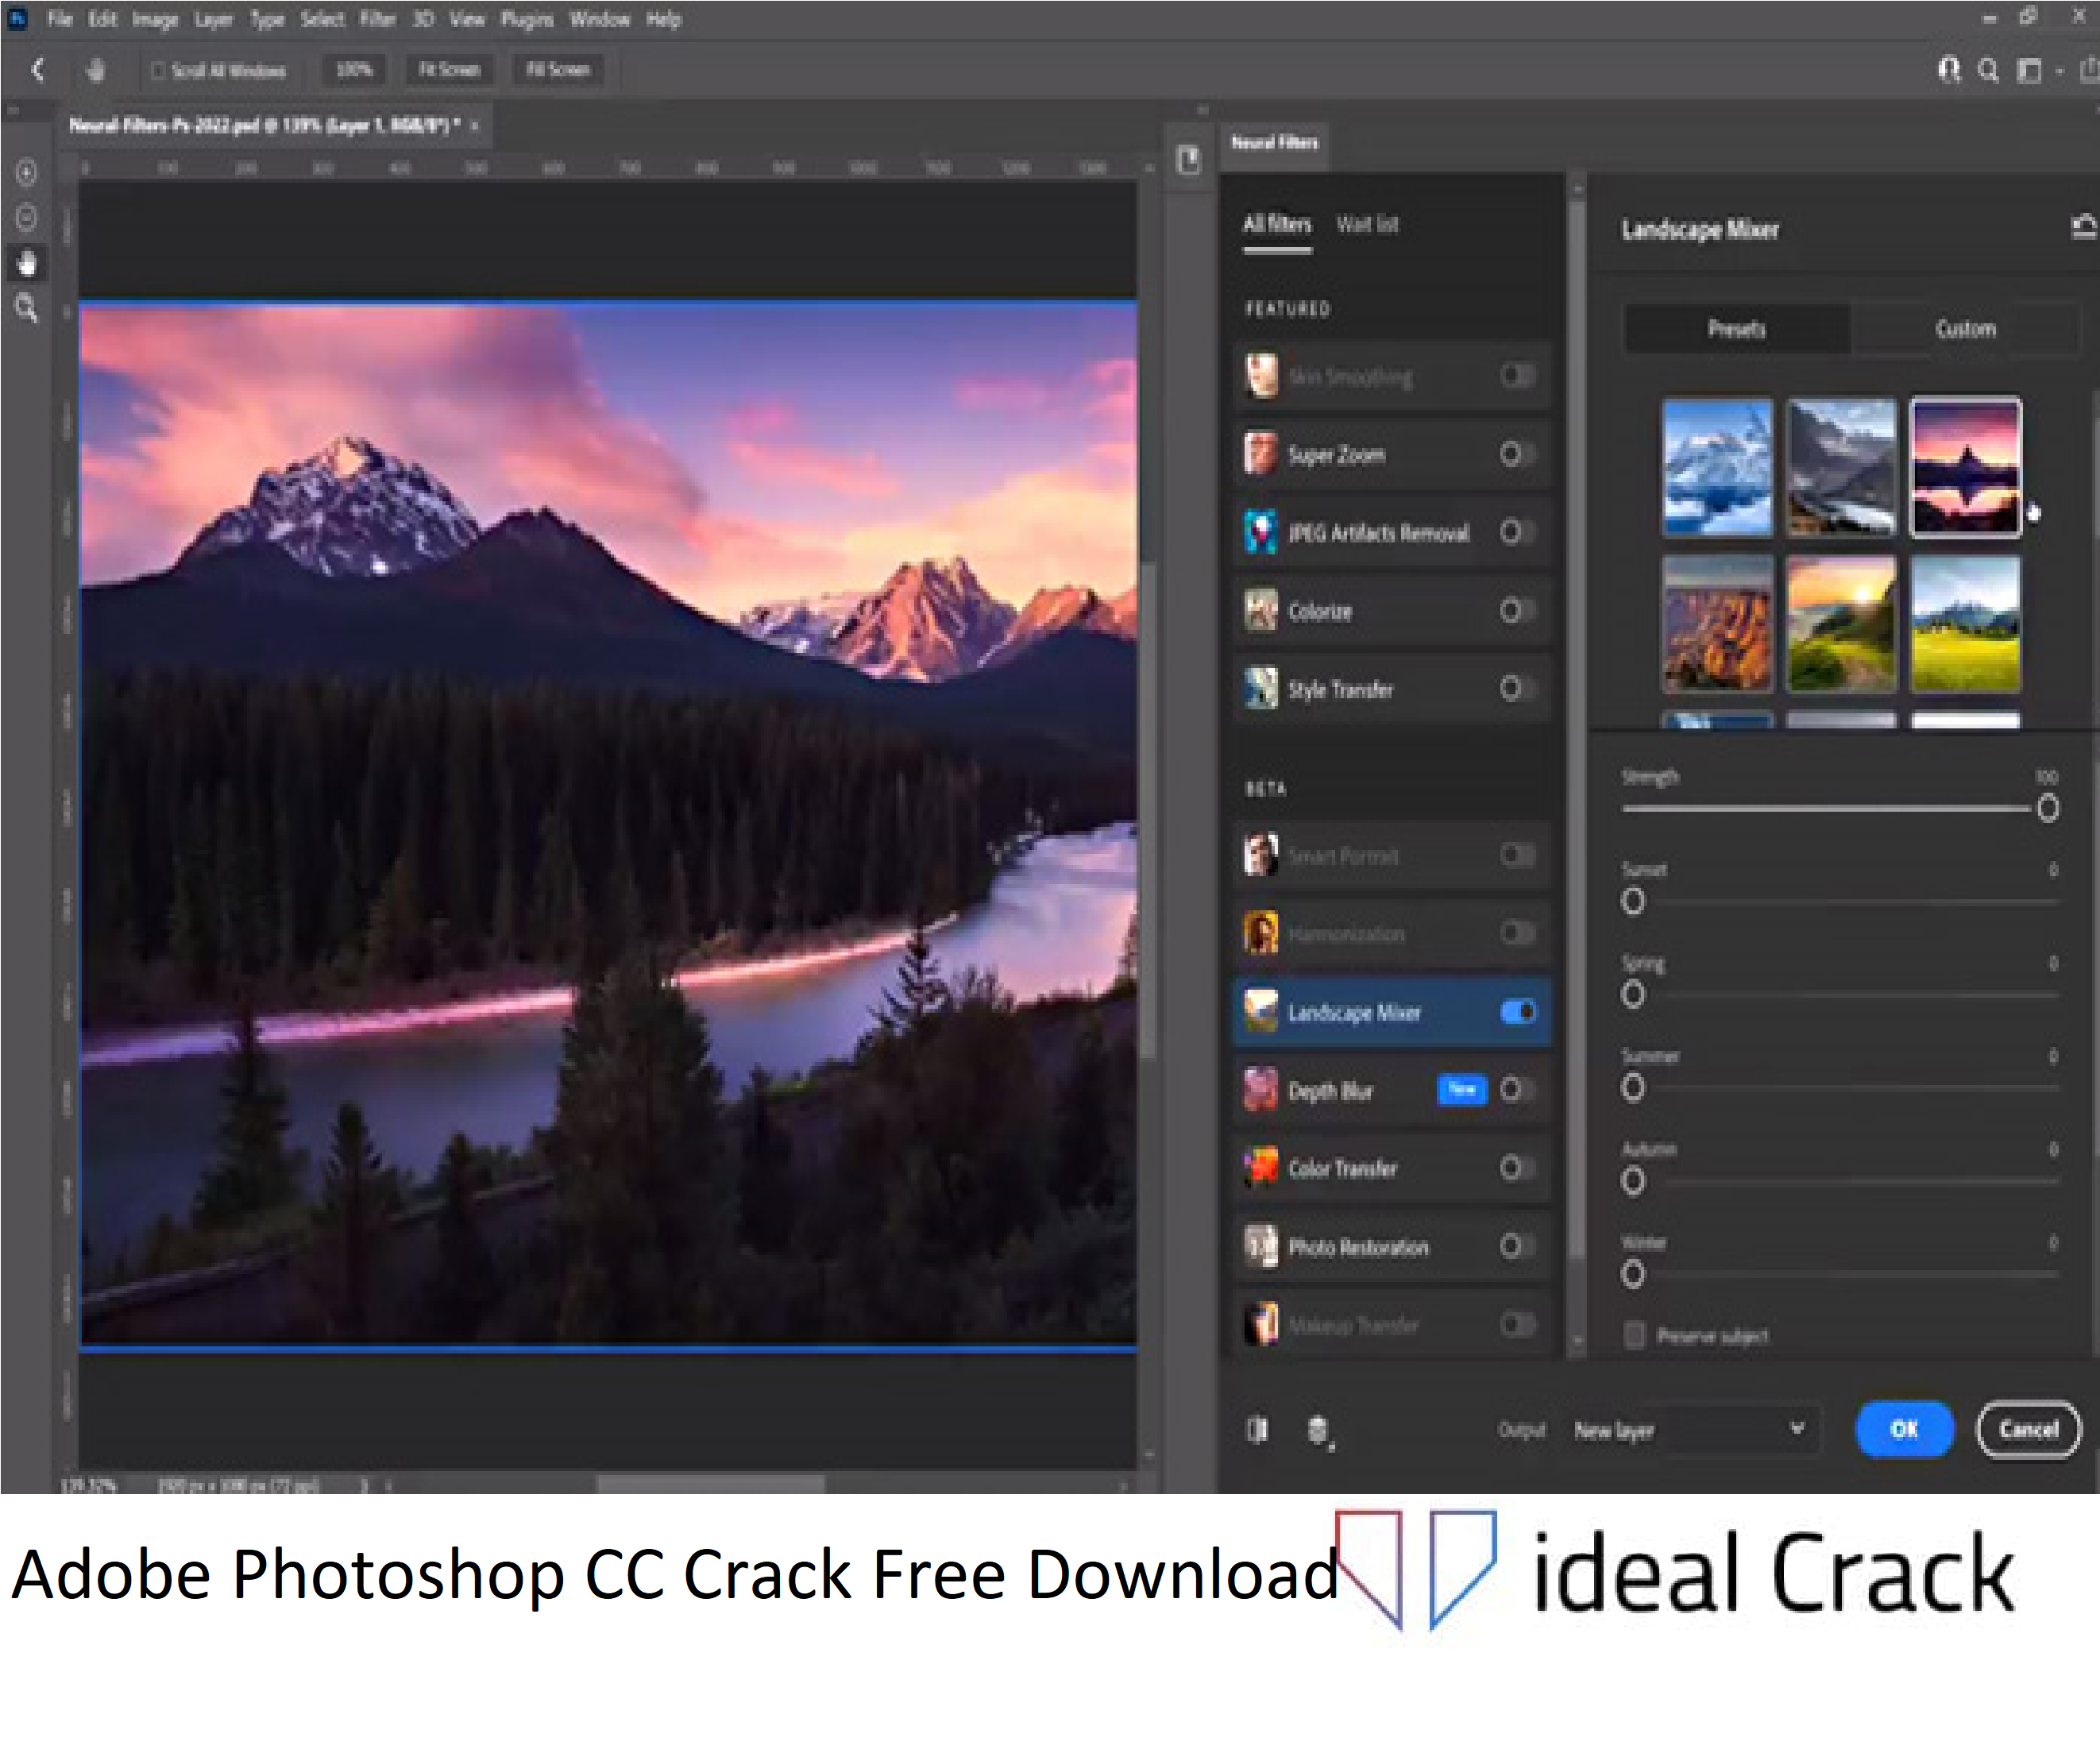 Adobe Photoshop CC Crack 24.0.0 Free Download 